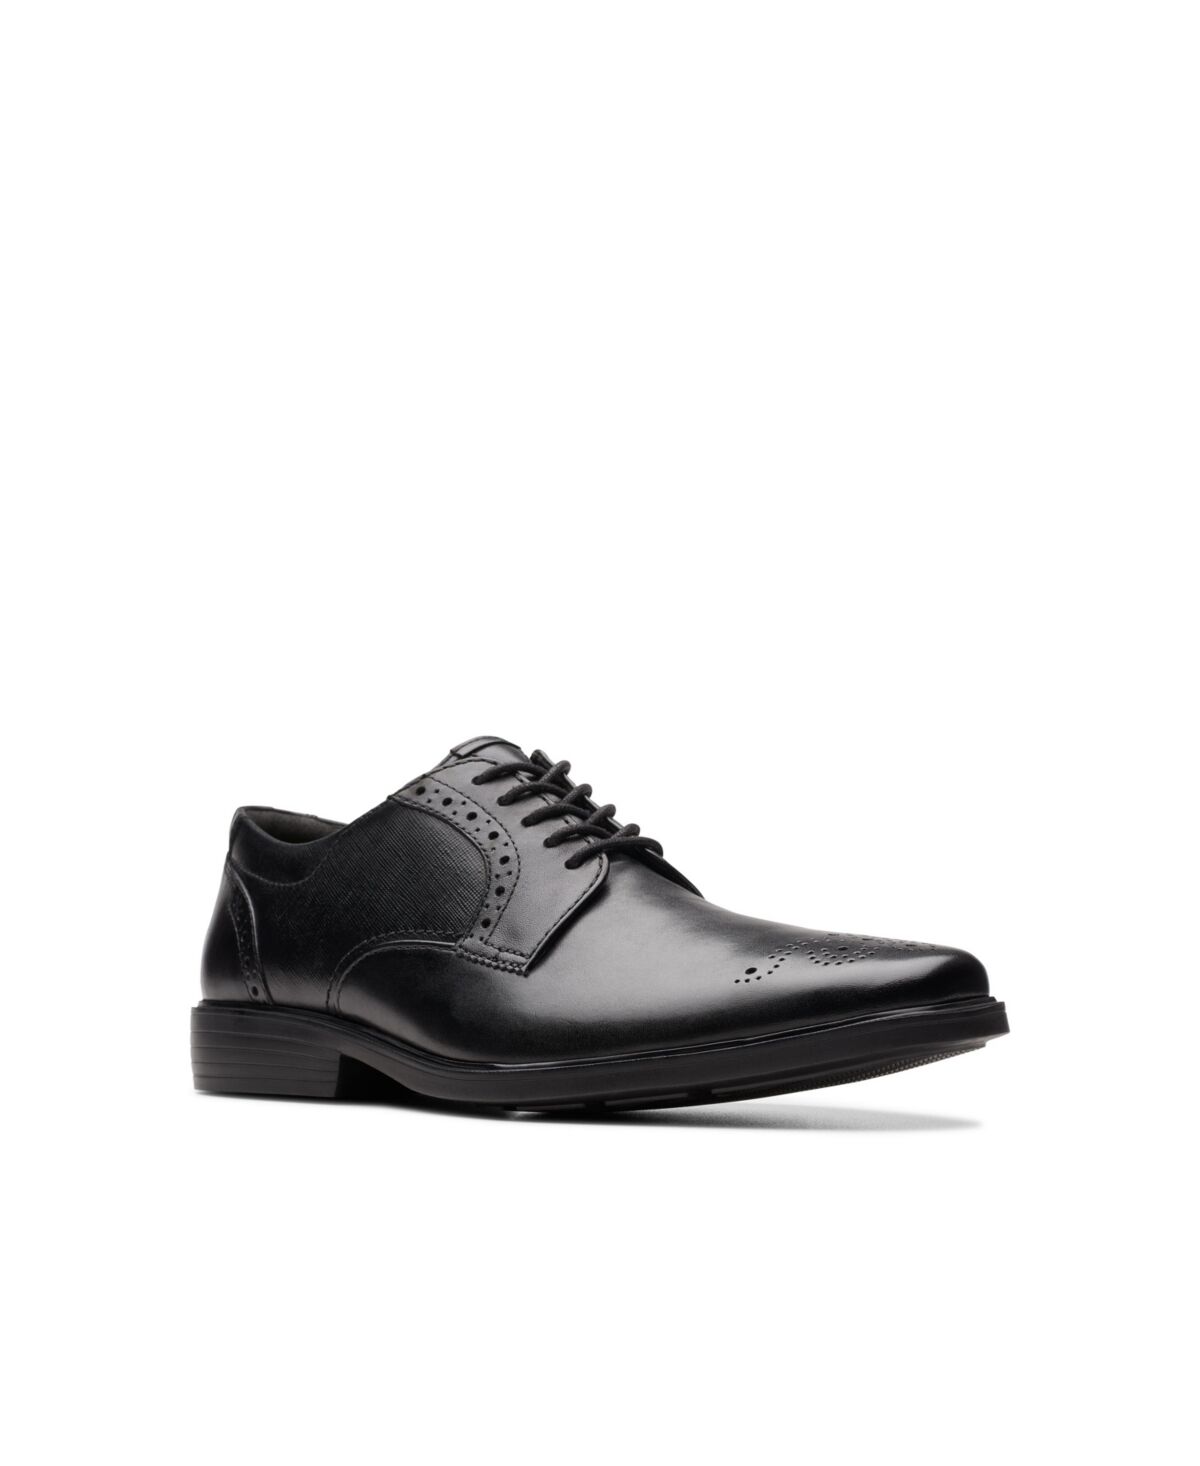 Clarks Men's Collection Clarkslite Tie Slip On Dress Shoes - Black Combi Leather